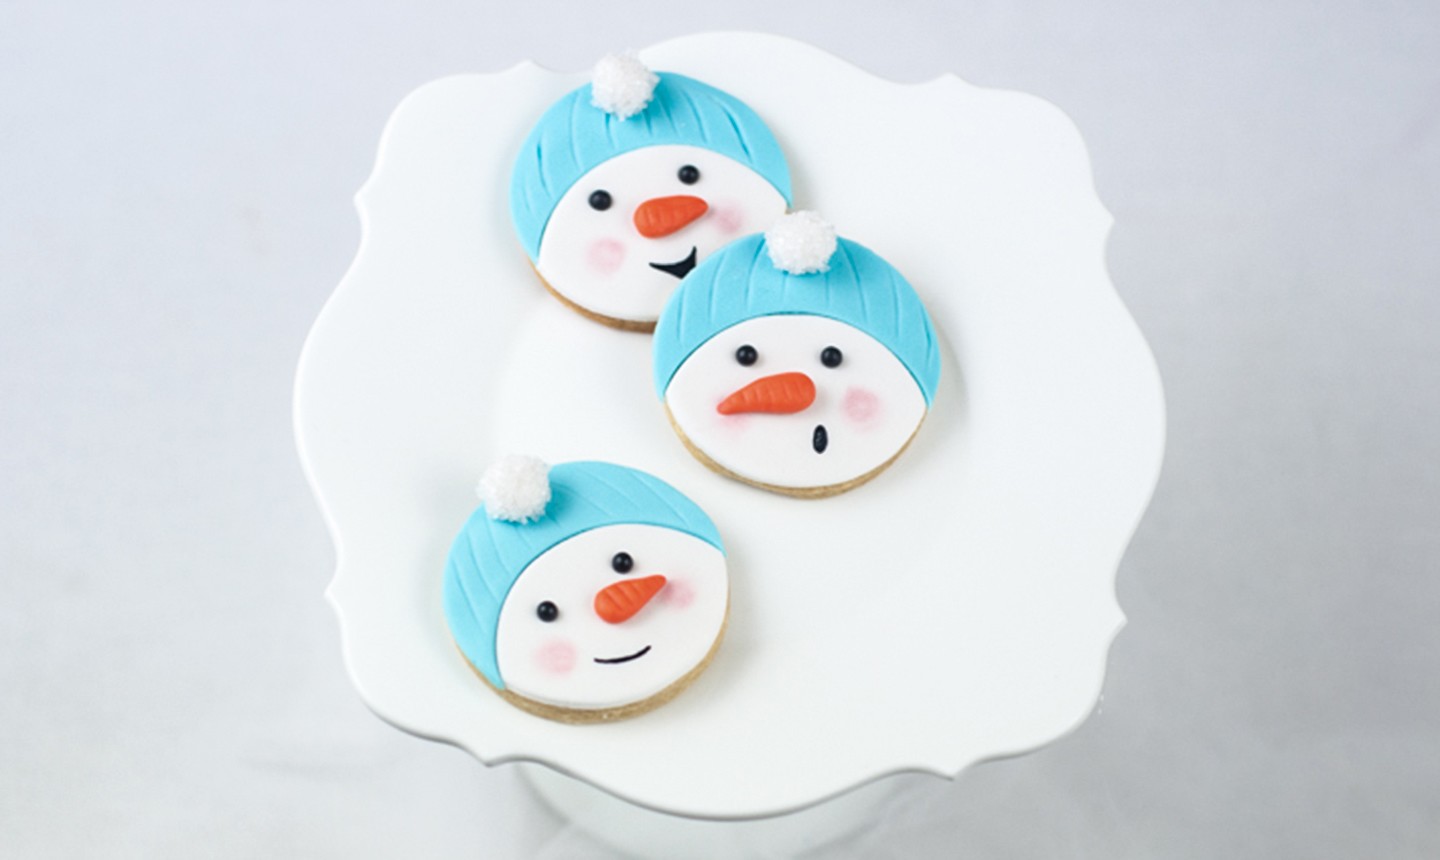 snowman face cookies